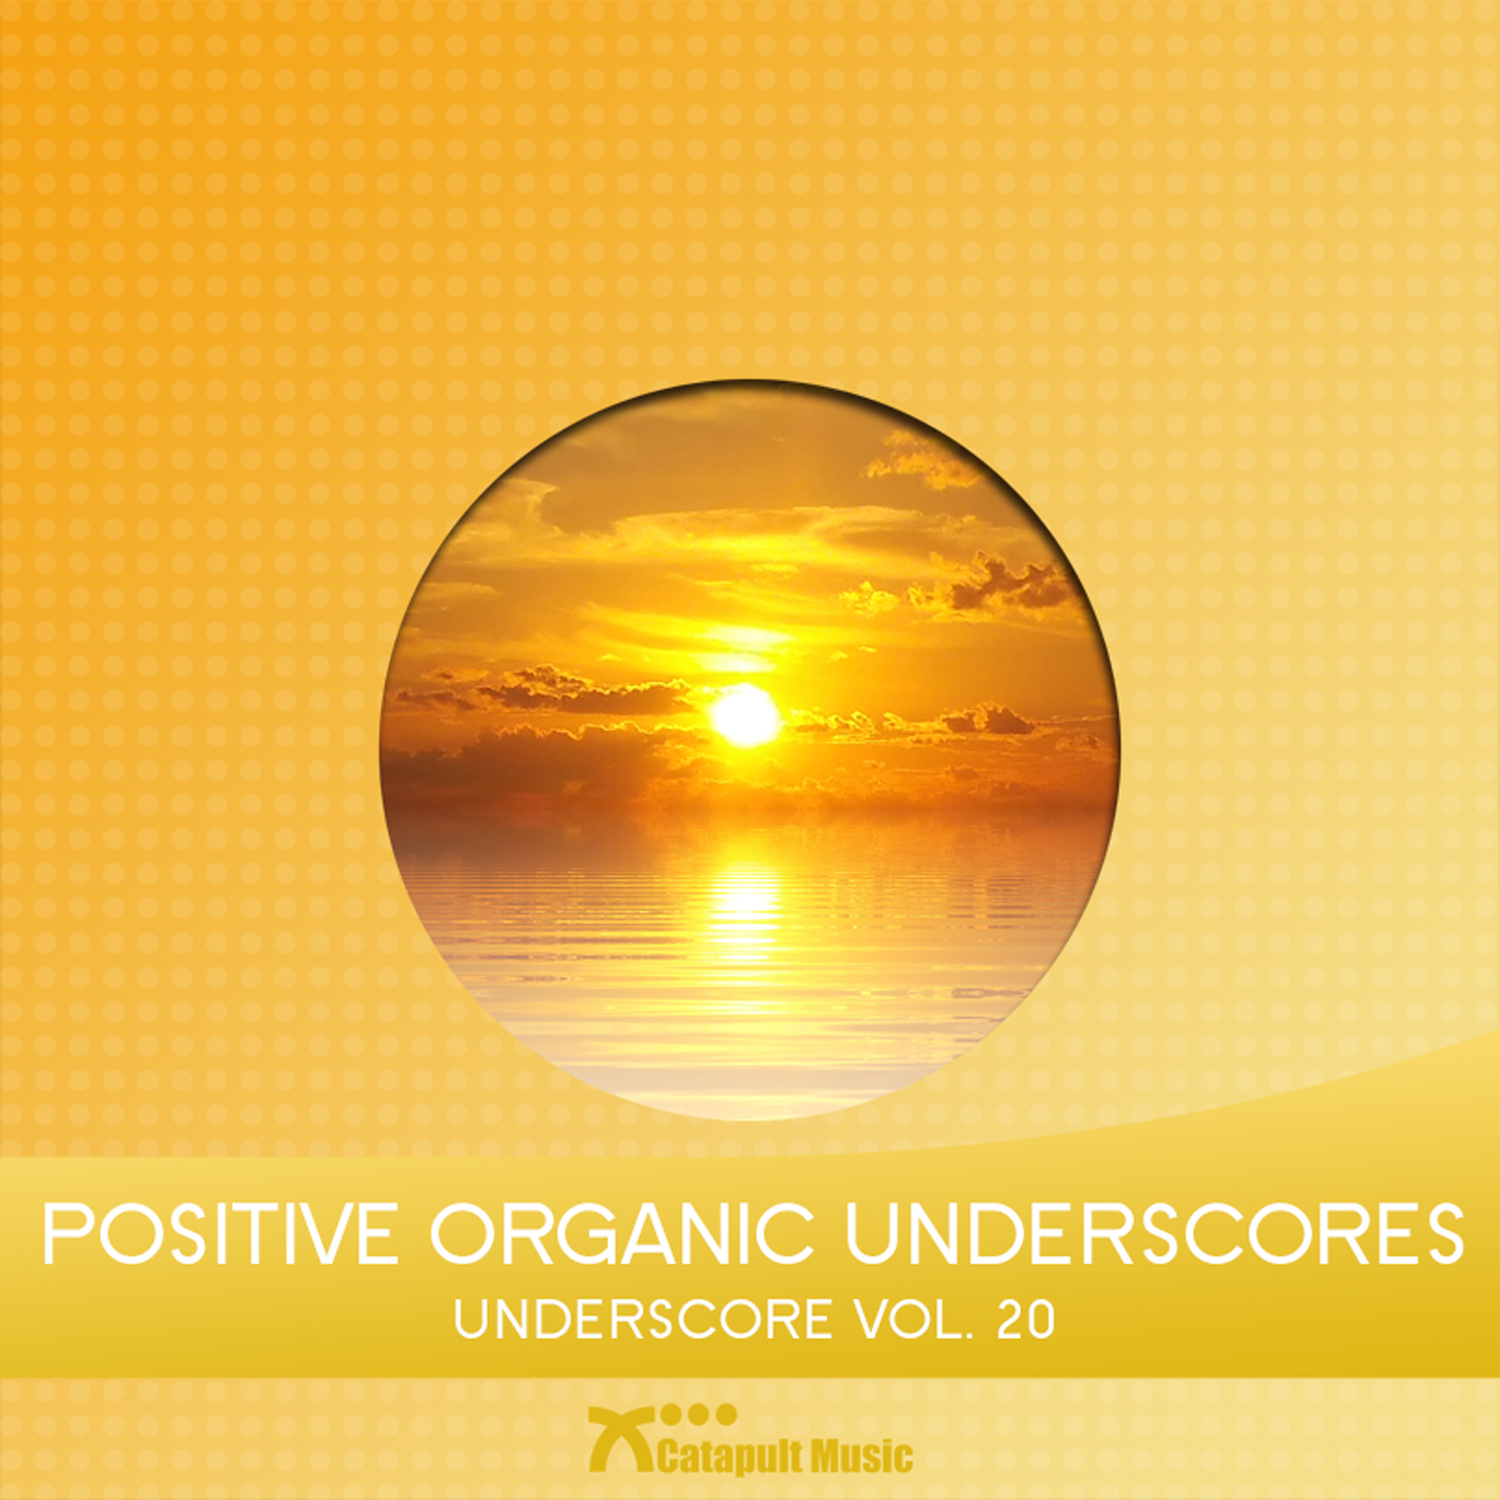 Positive Organic Underscores